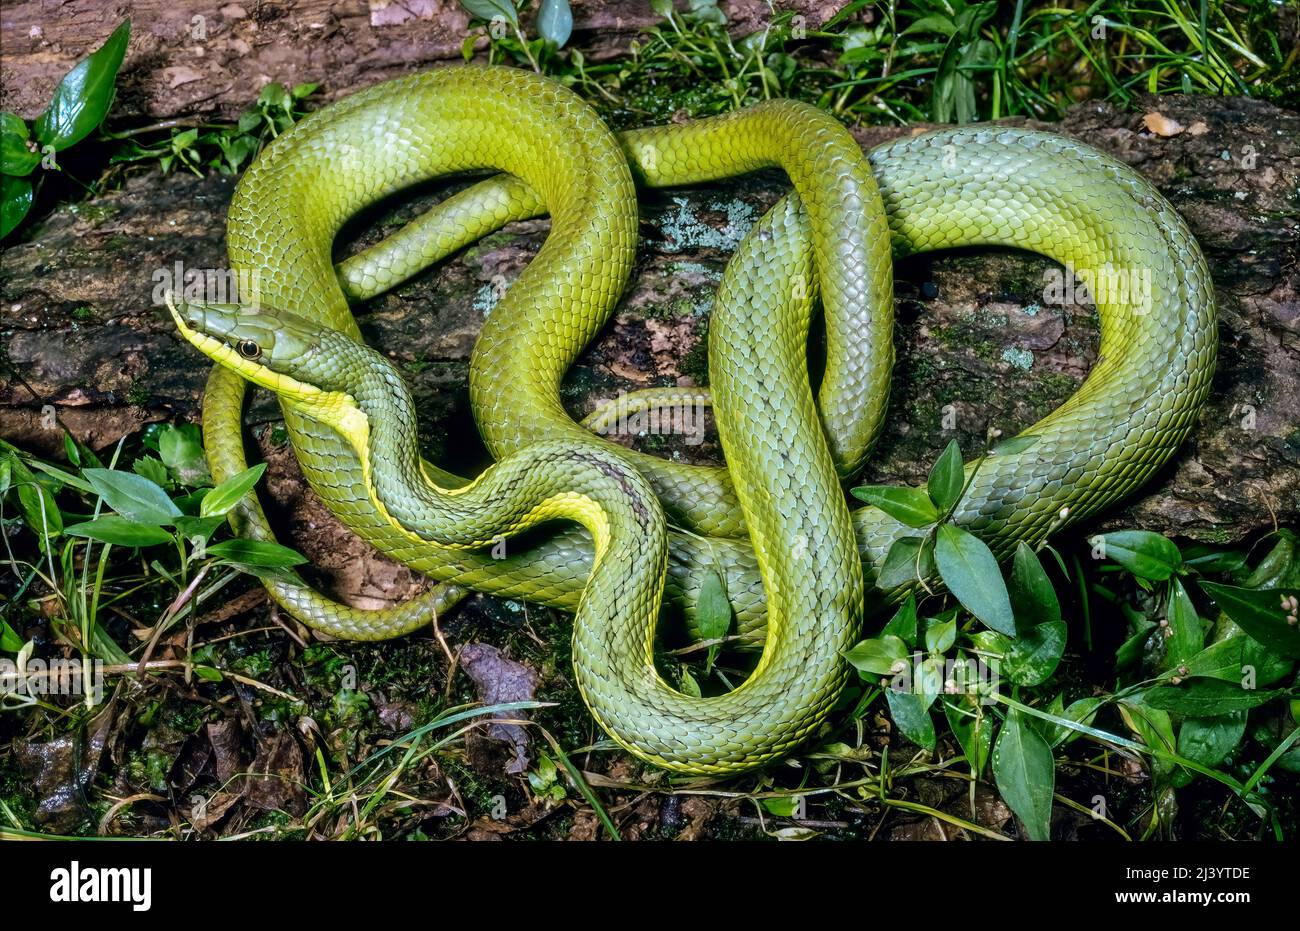 Green Vine Snake (Oxybelis fulgidus), Brasile, Sud America Foto Stock